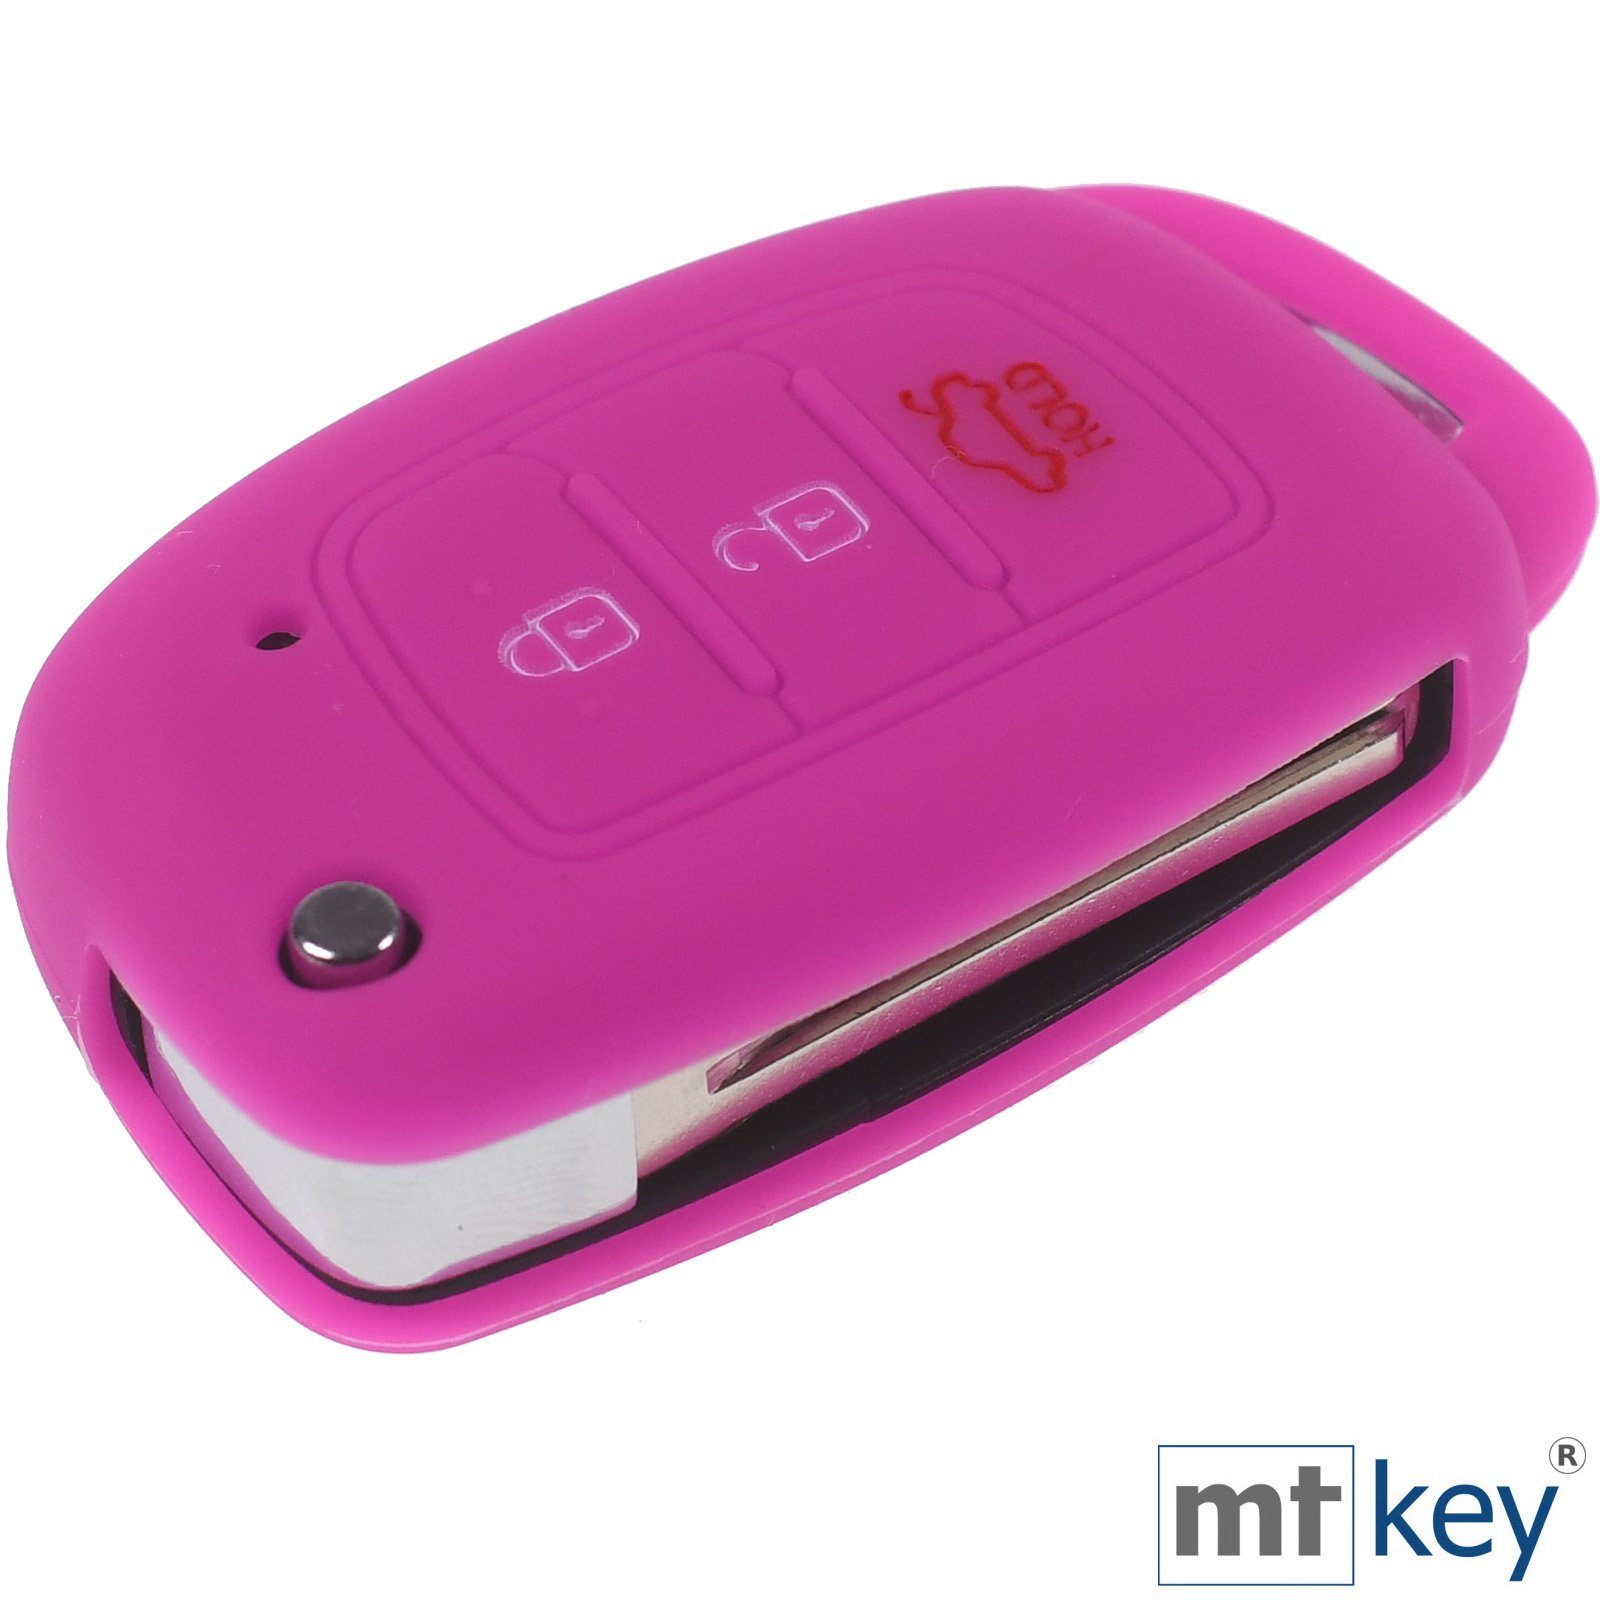 i20 Silikon Klappschlüssel 3 Autoschlüssel + Wabe Schlüsseltasche Schutzhülle Pink Hyundai im Accent Tucson i40 Knopf ix25 für i10 mt-key Design Schlüsselband, ix35